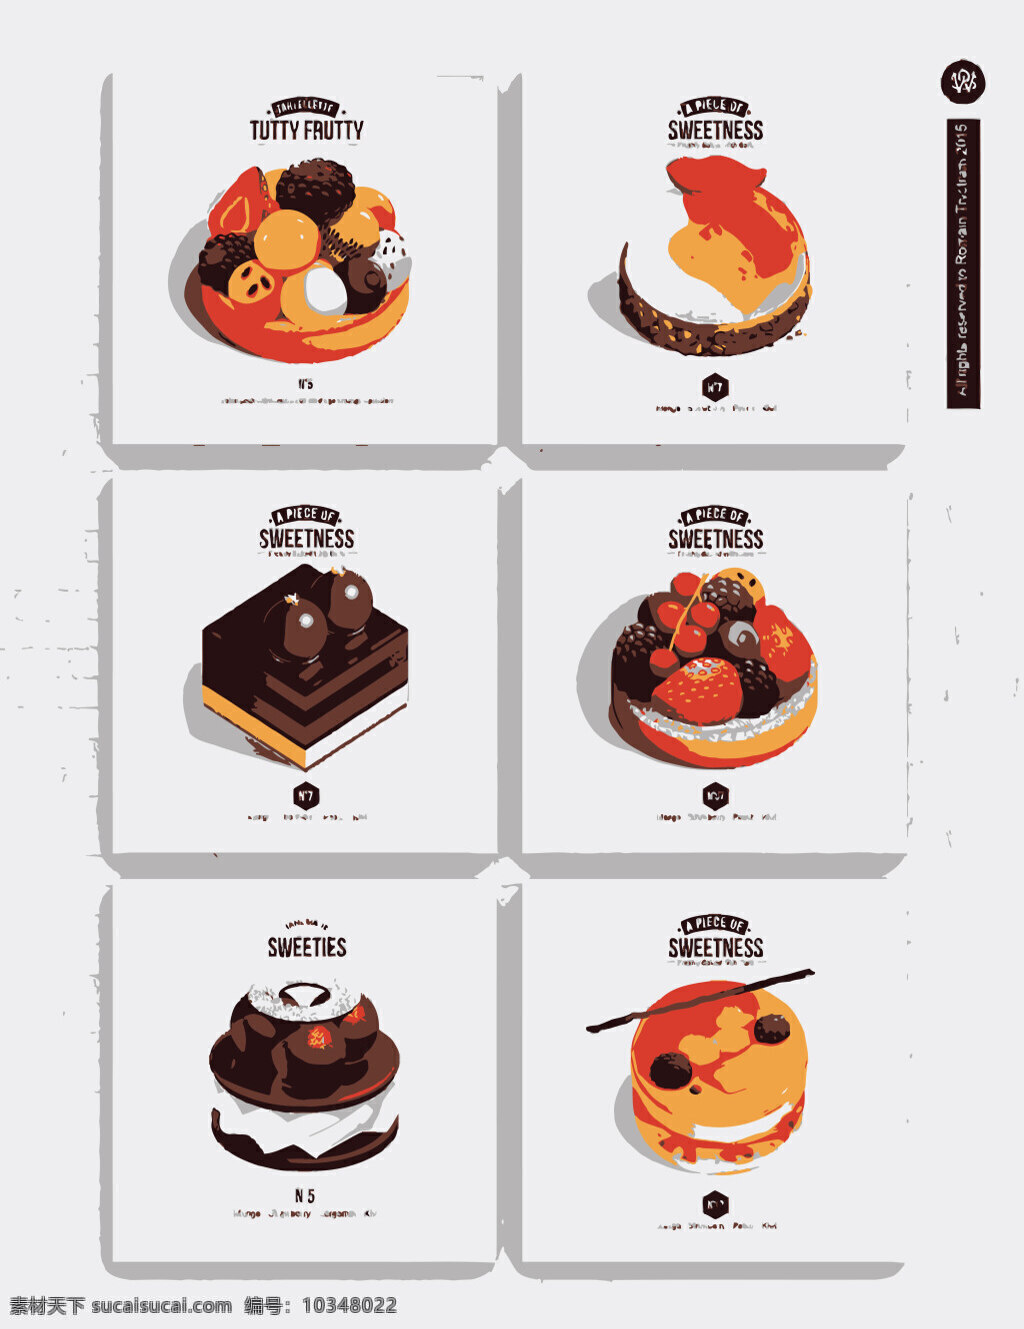 behance 创意 插画 食物 蛋糕 草莓 巧克力 美食 甜食 白色